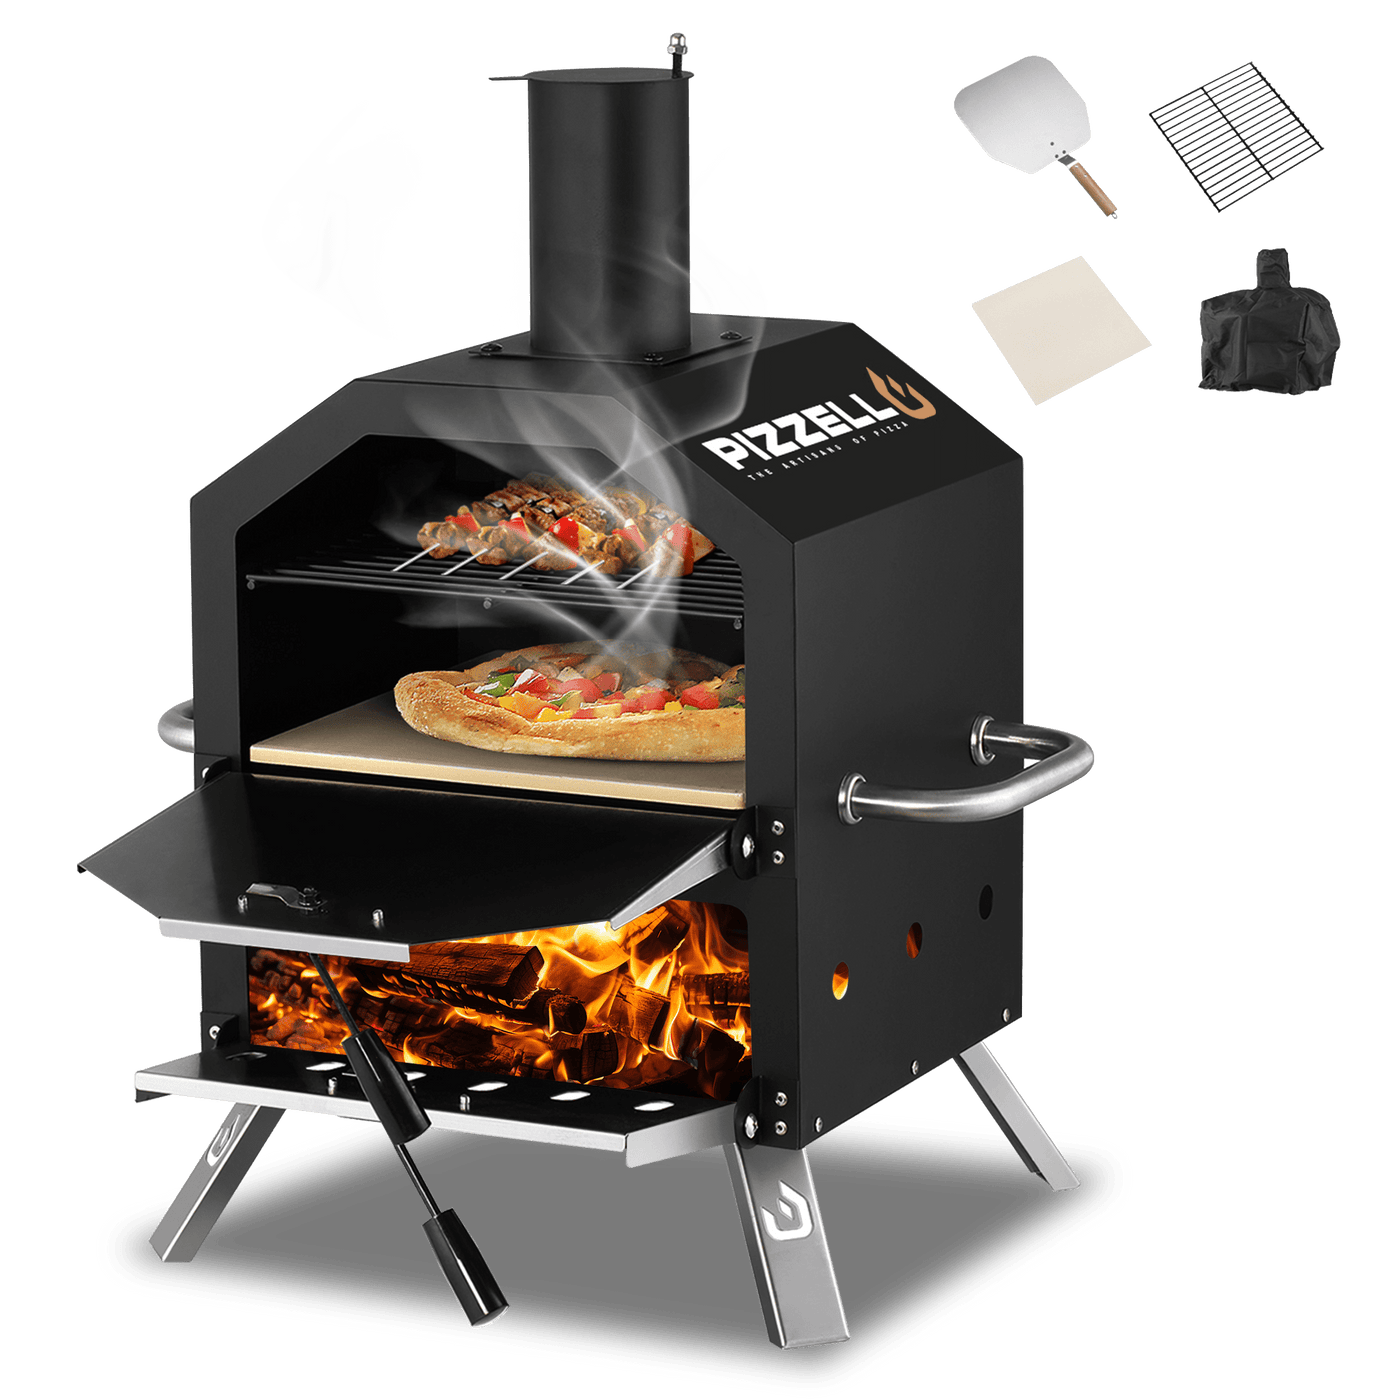 Pizzello Grande - Outdoor 2-Layer Pizza Oven - Pizzello#size_12-inch